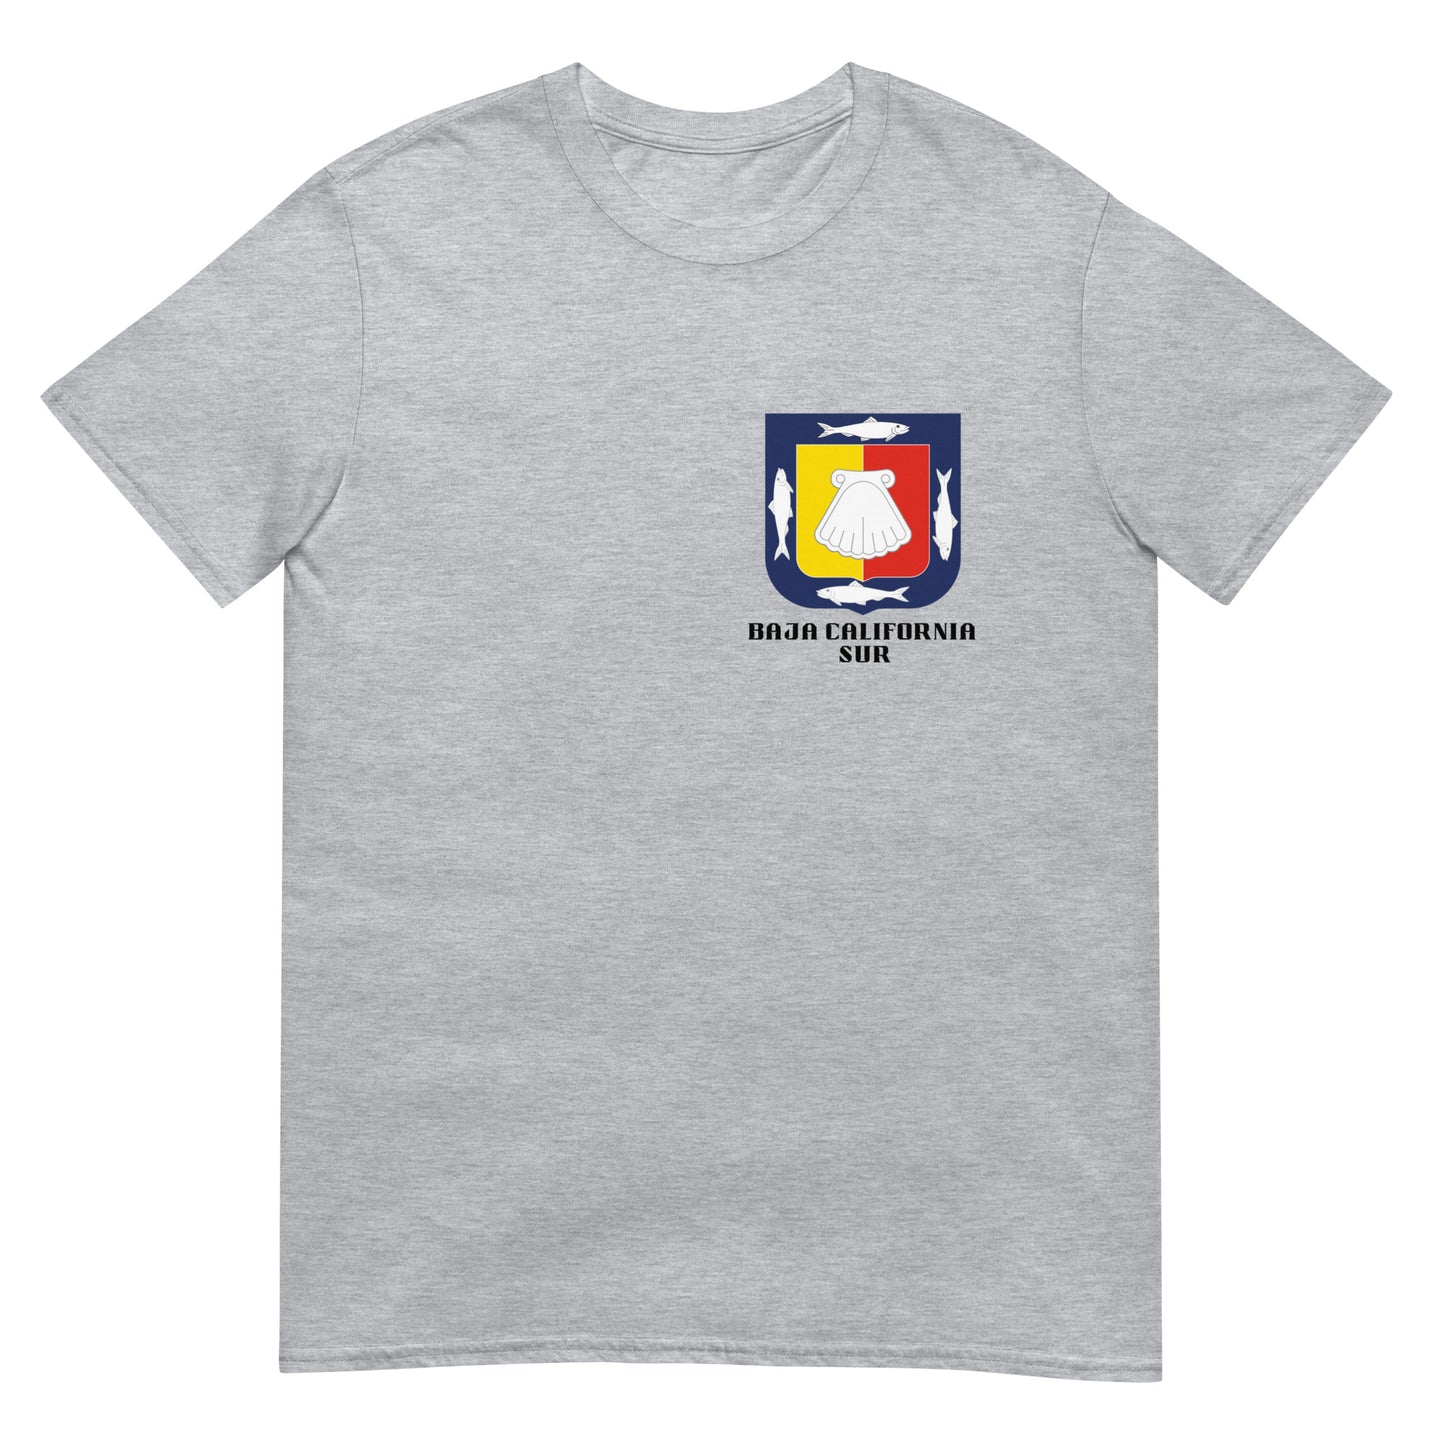 Baja California Sur- T-Shirt